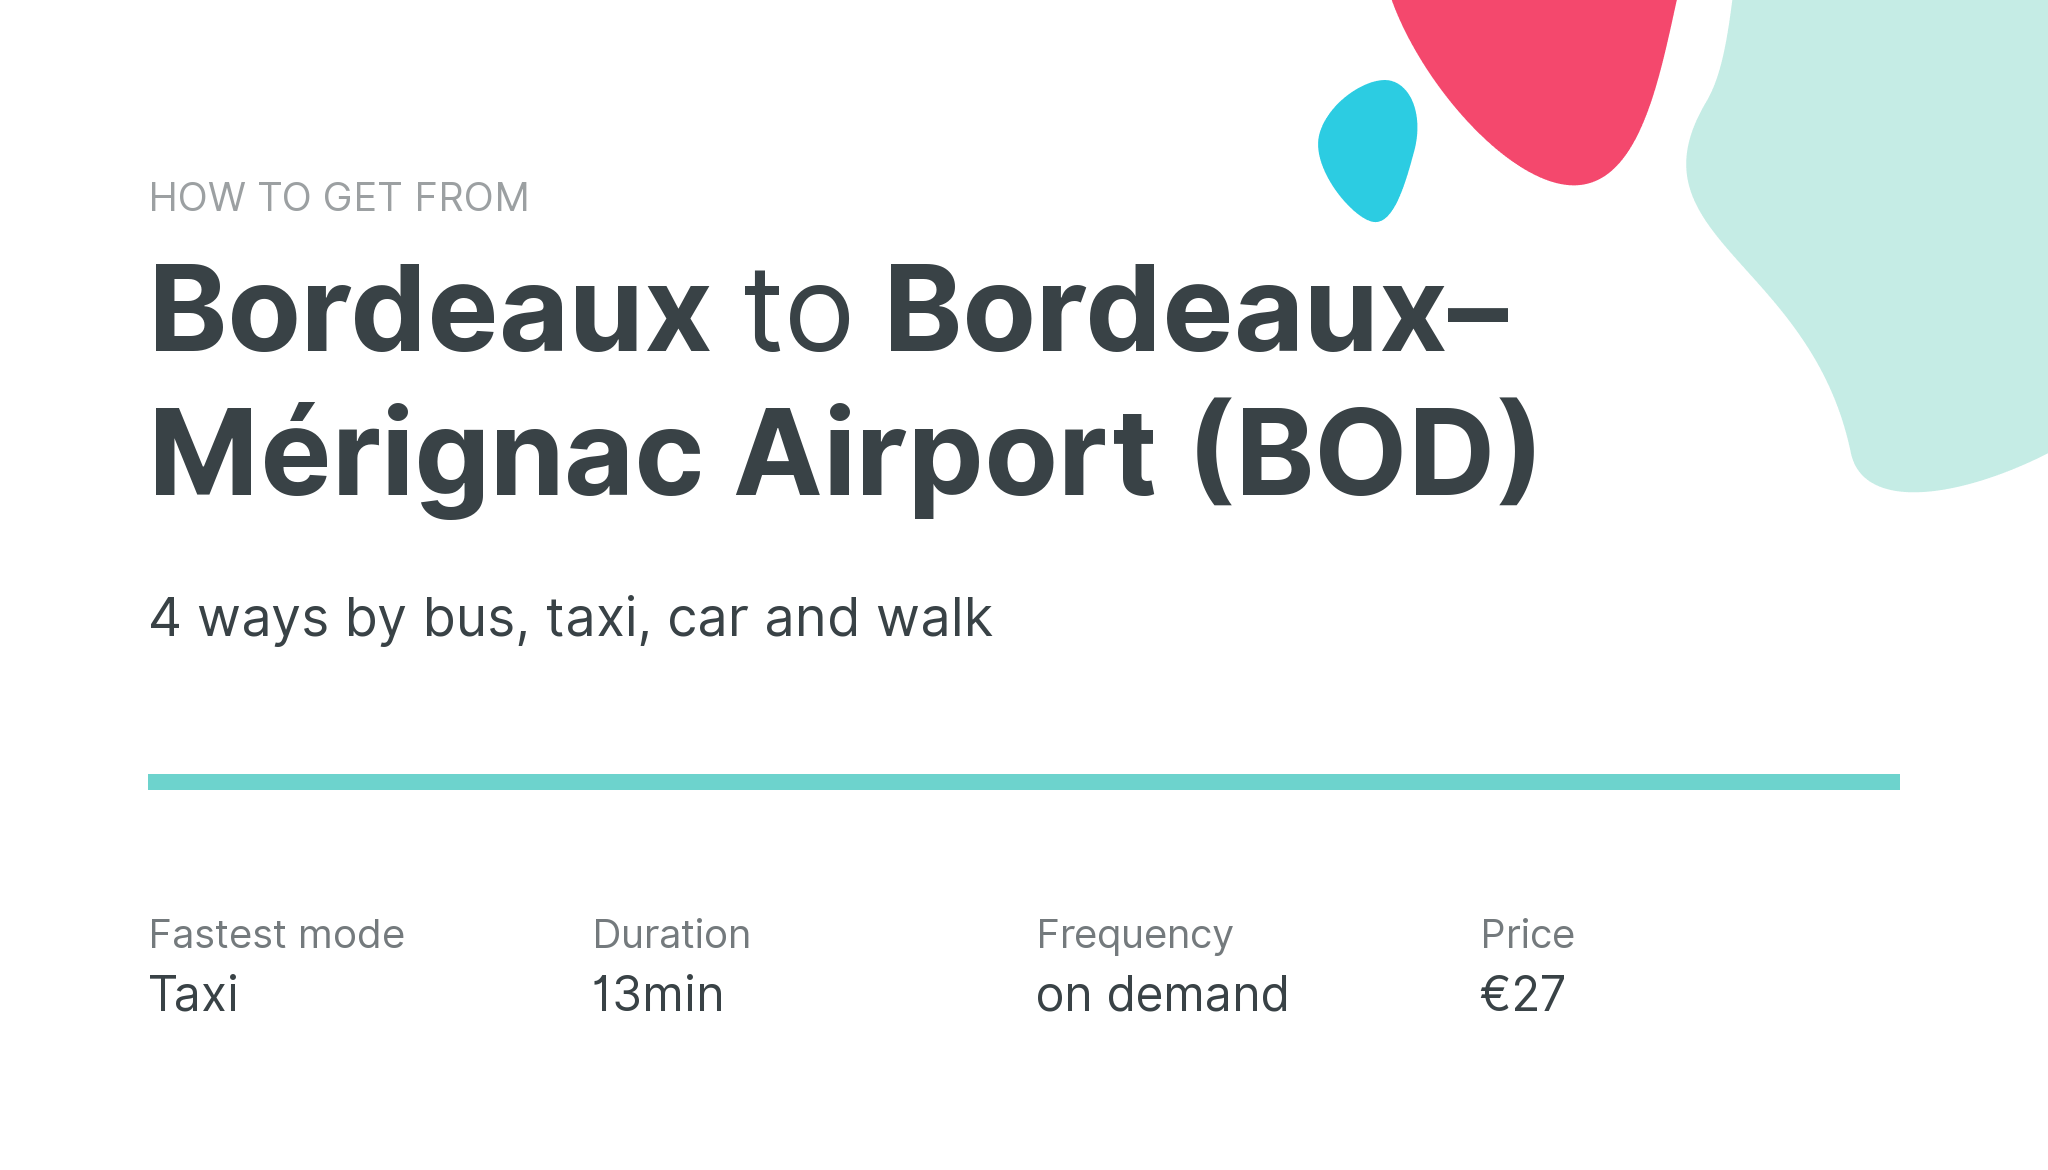 How do I get from Bordeaux to Bordeaux–Mérignac Airport (BOD)